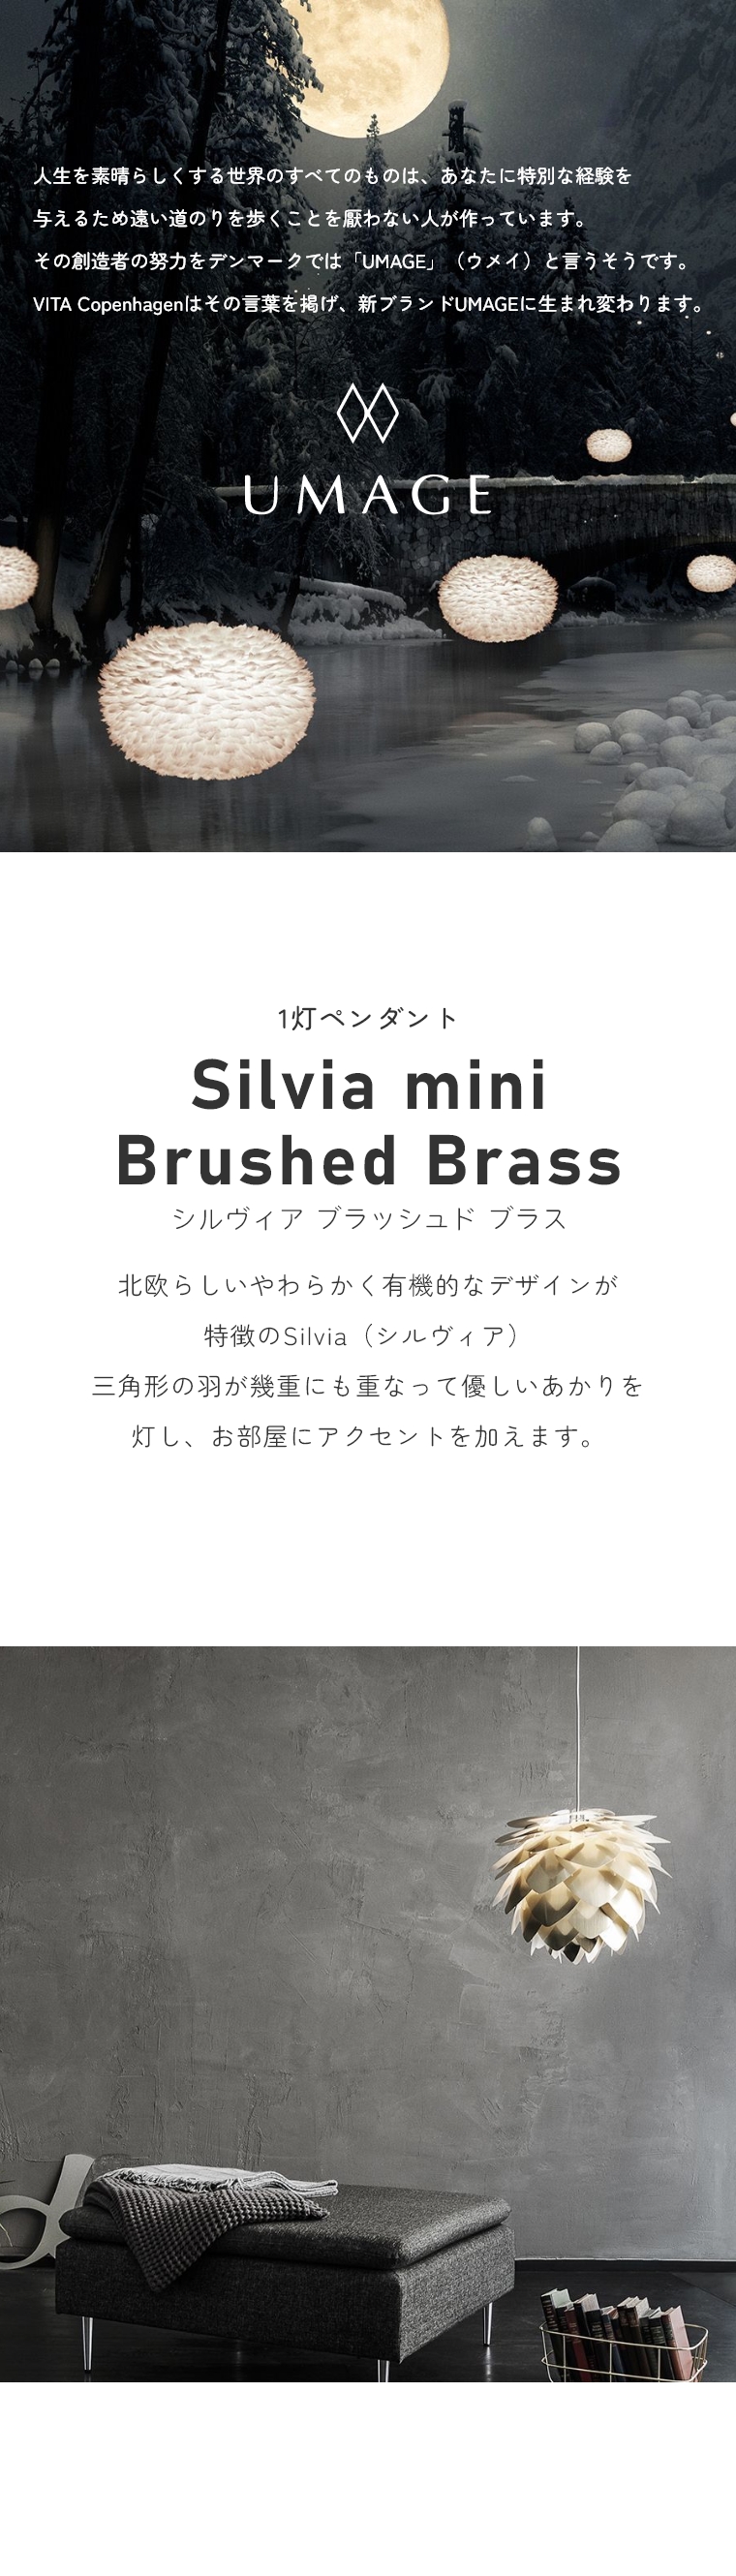 keCXg̃VvȃCg UMAGE(EC) Silvia mini Brushed BrassiVBA~jubVhuXj 1y_gCg 2071 GbNX